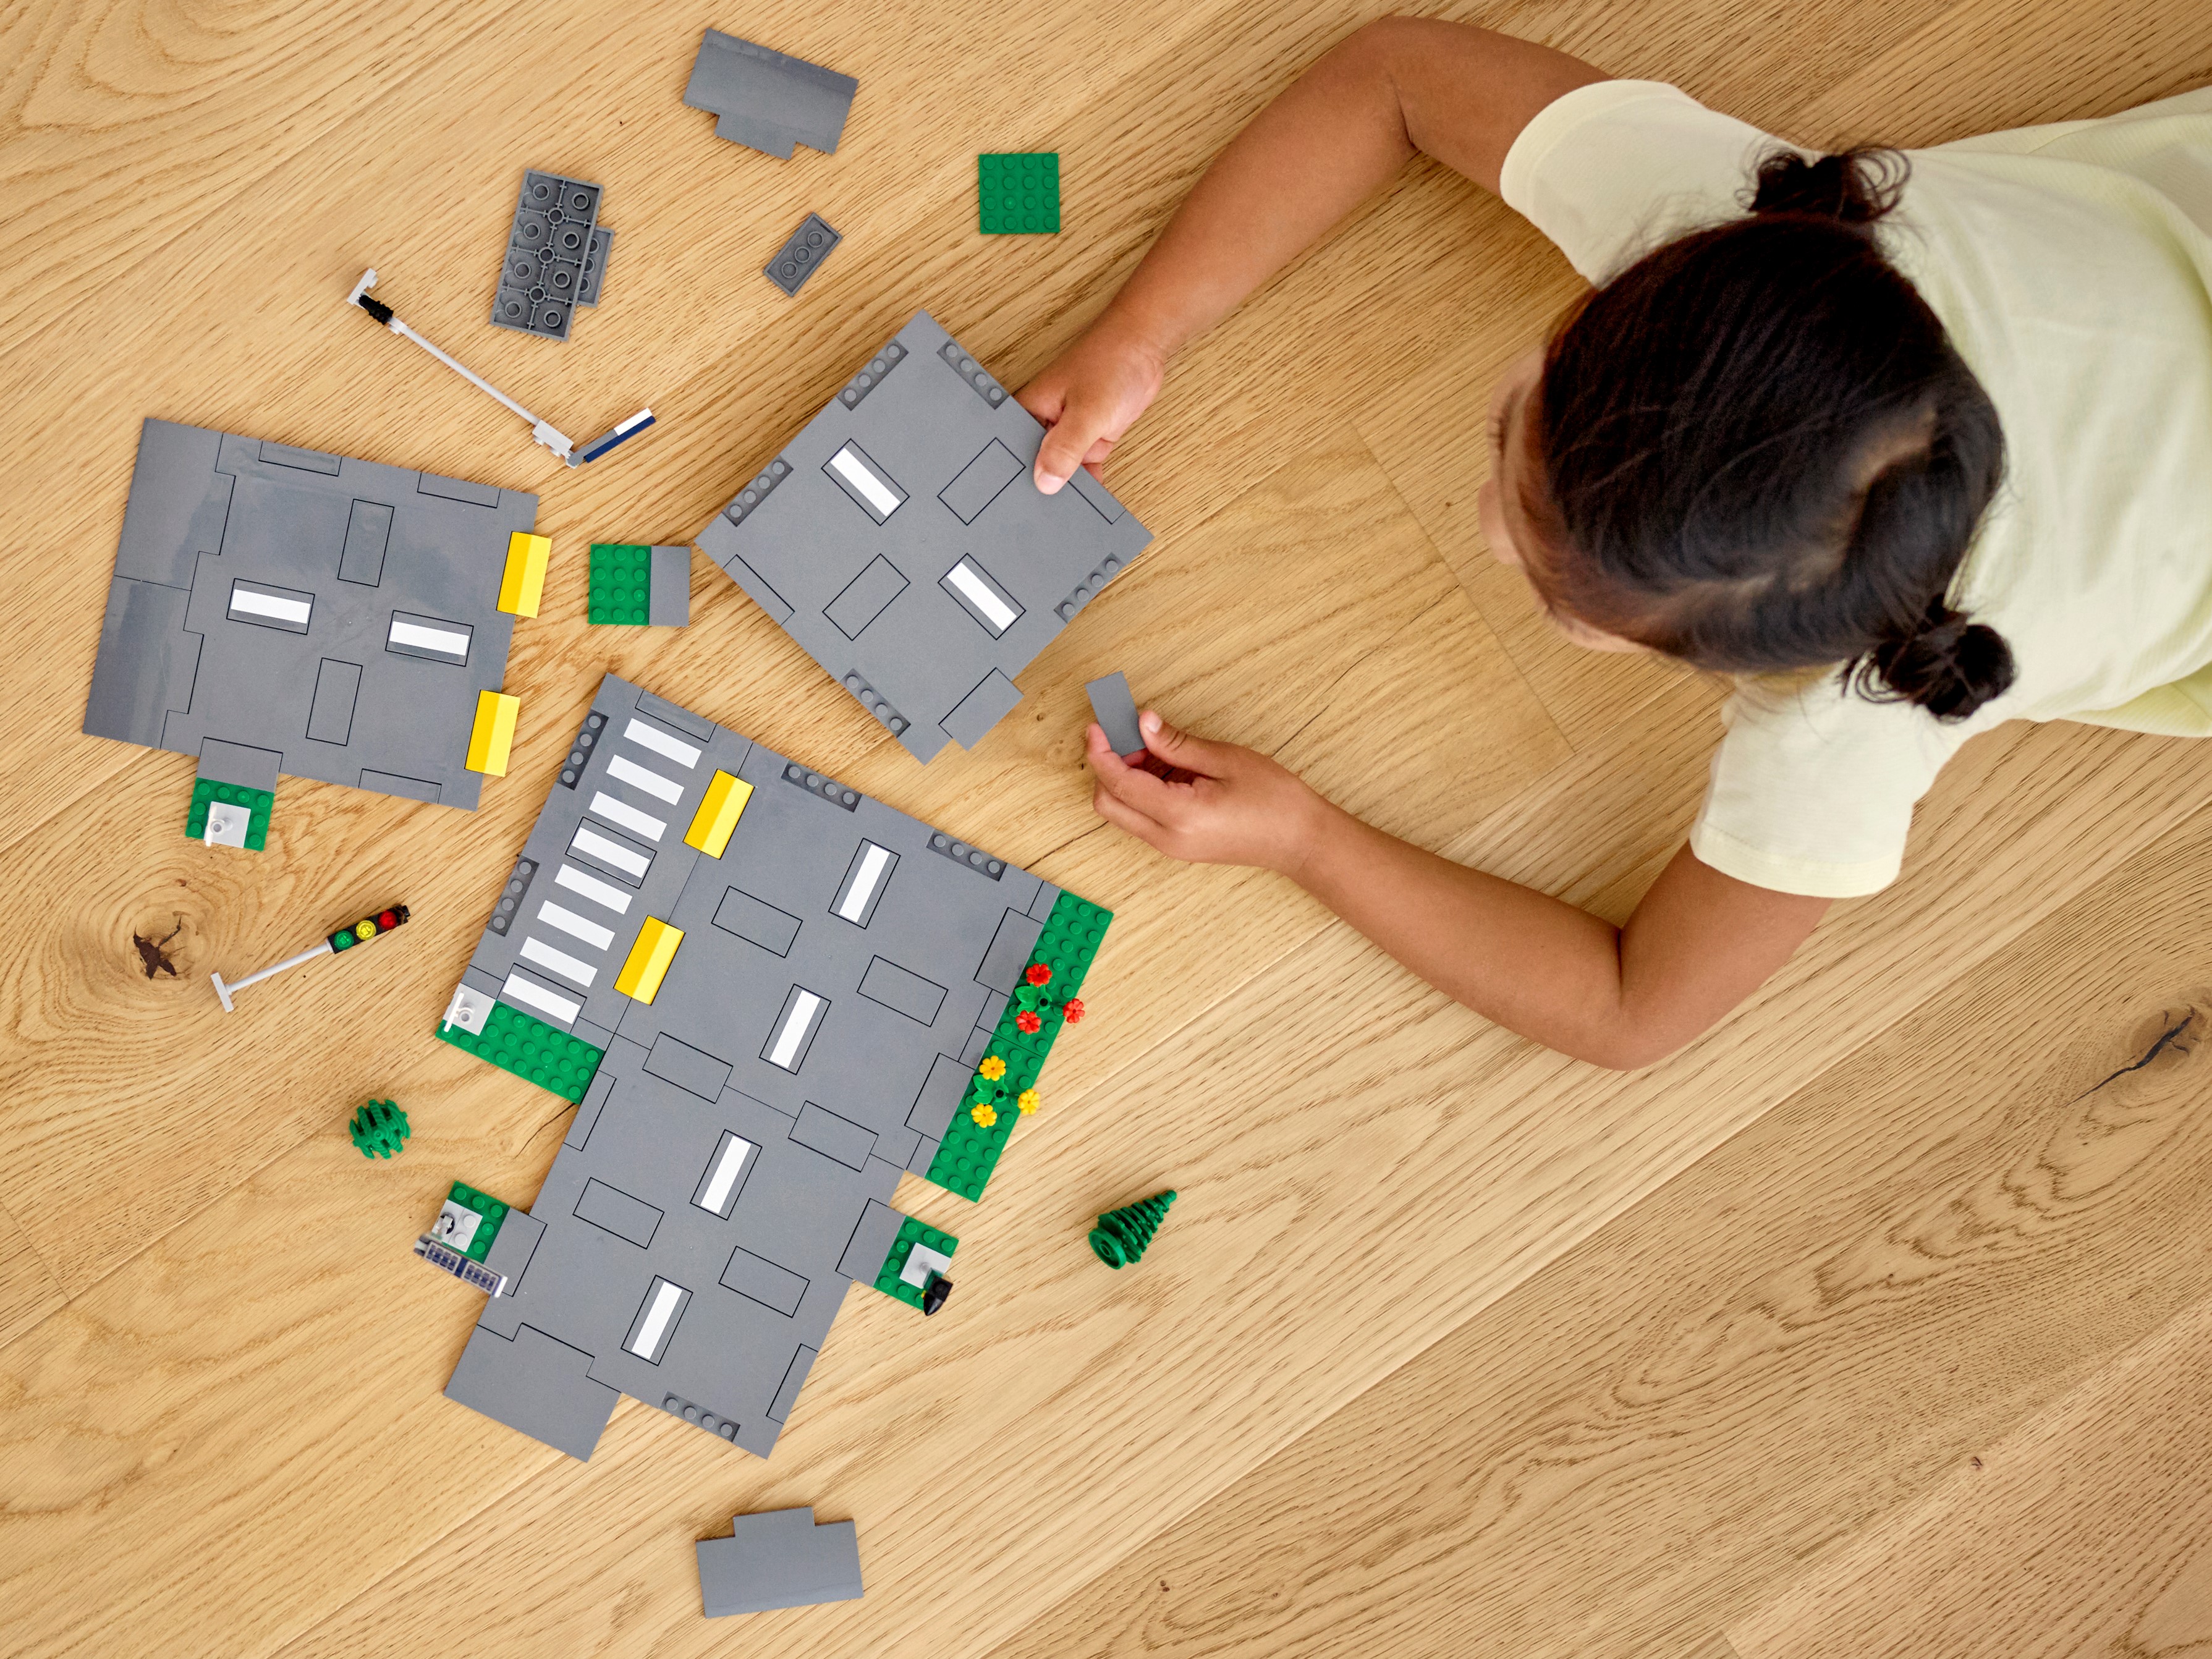 LEGO 60304 City Road Plates Building Kit New